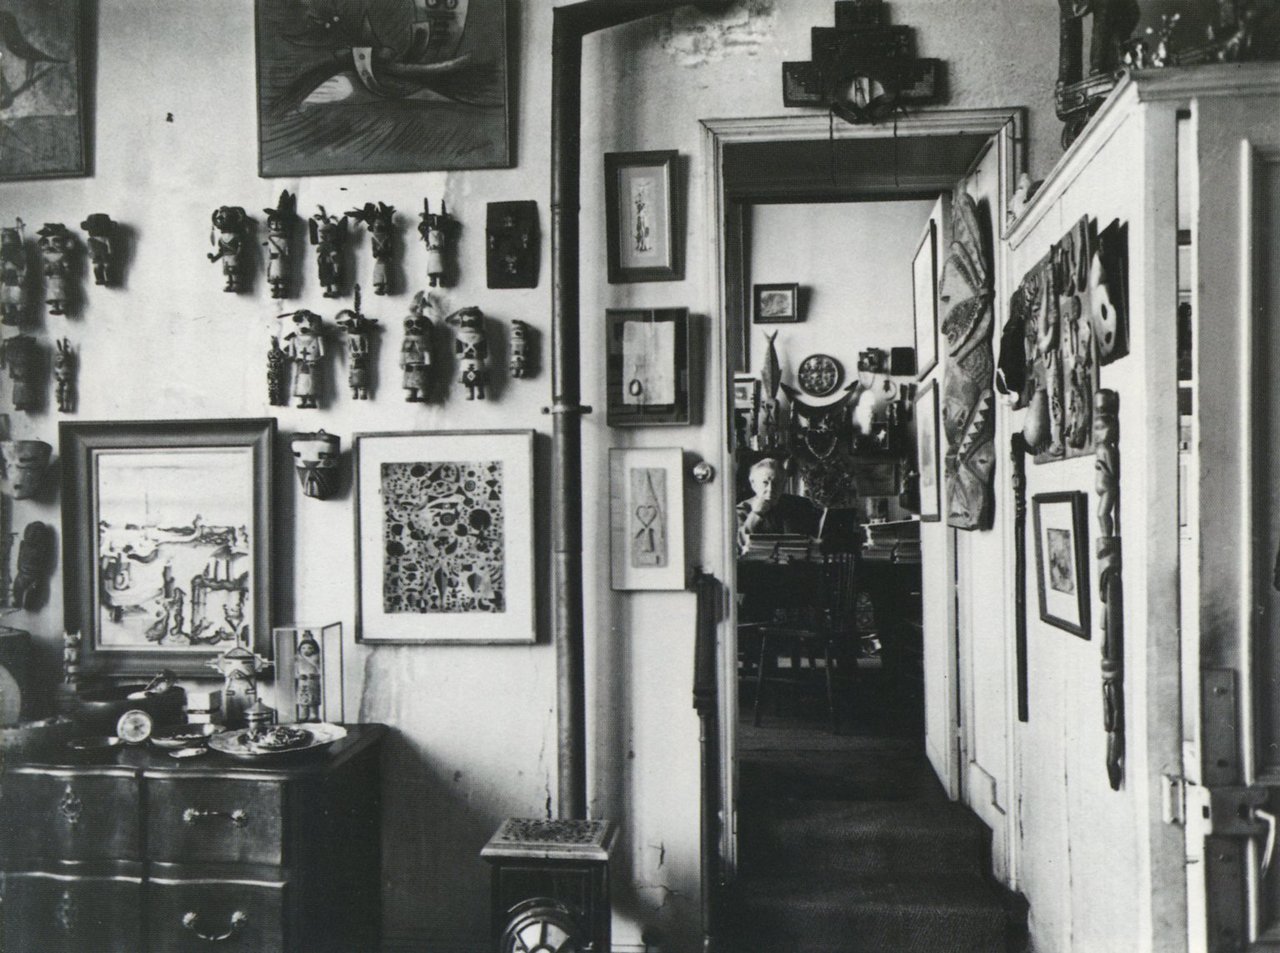 slcvisualresources:  Documenting Dada, Surrealism and Degenerate Art 1920-1940s In